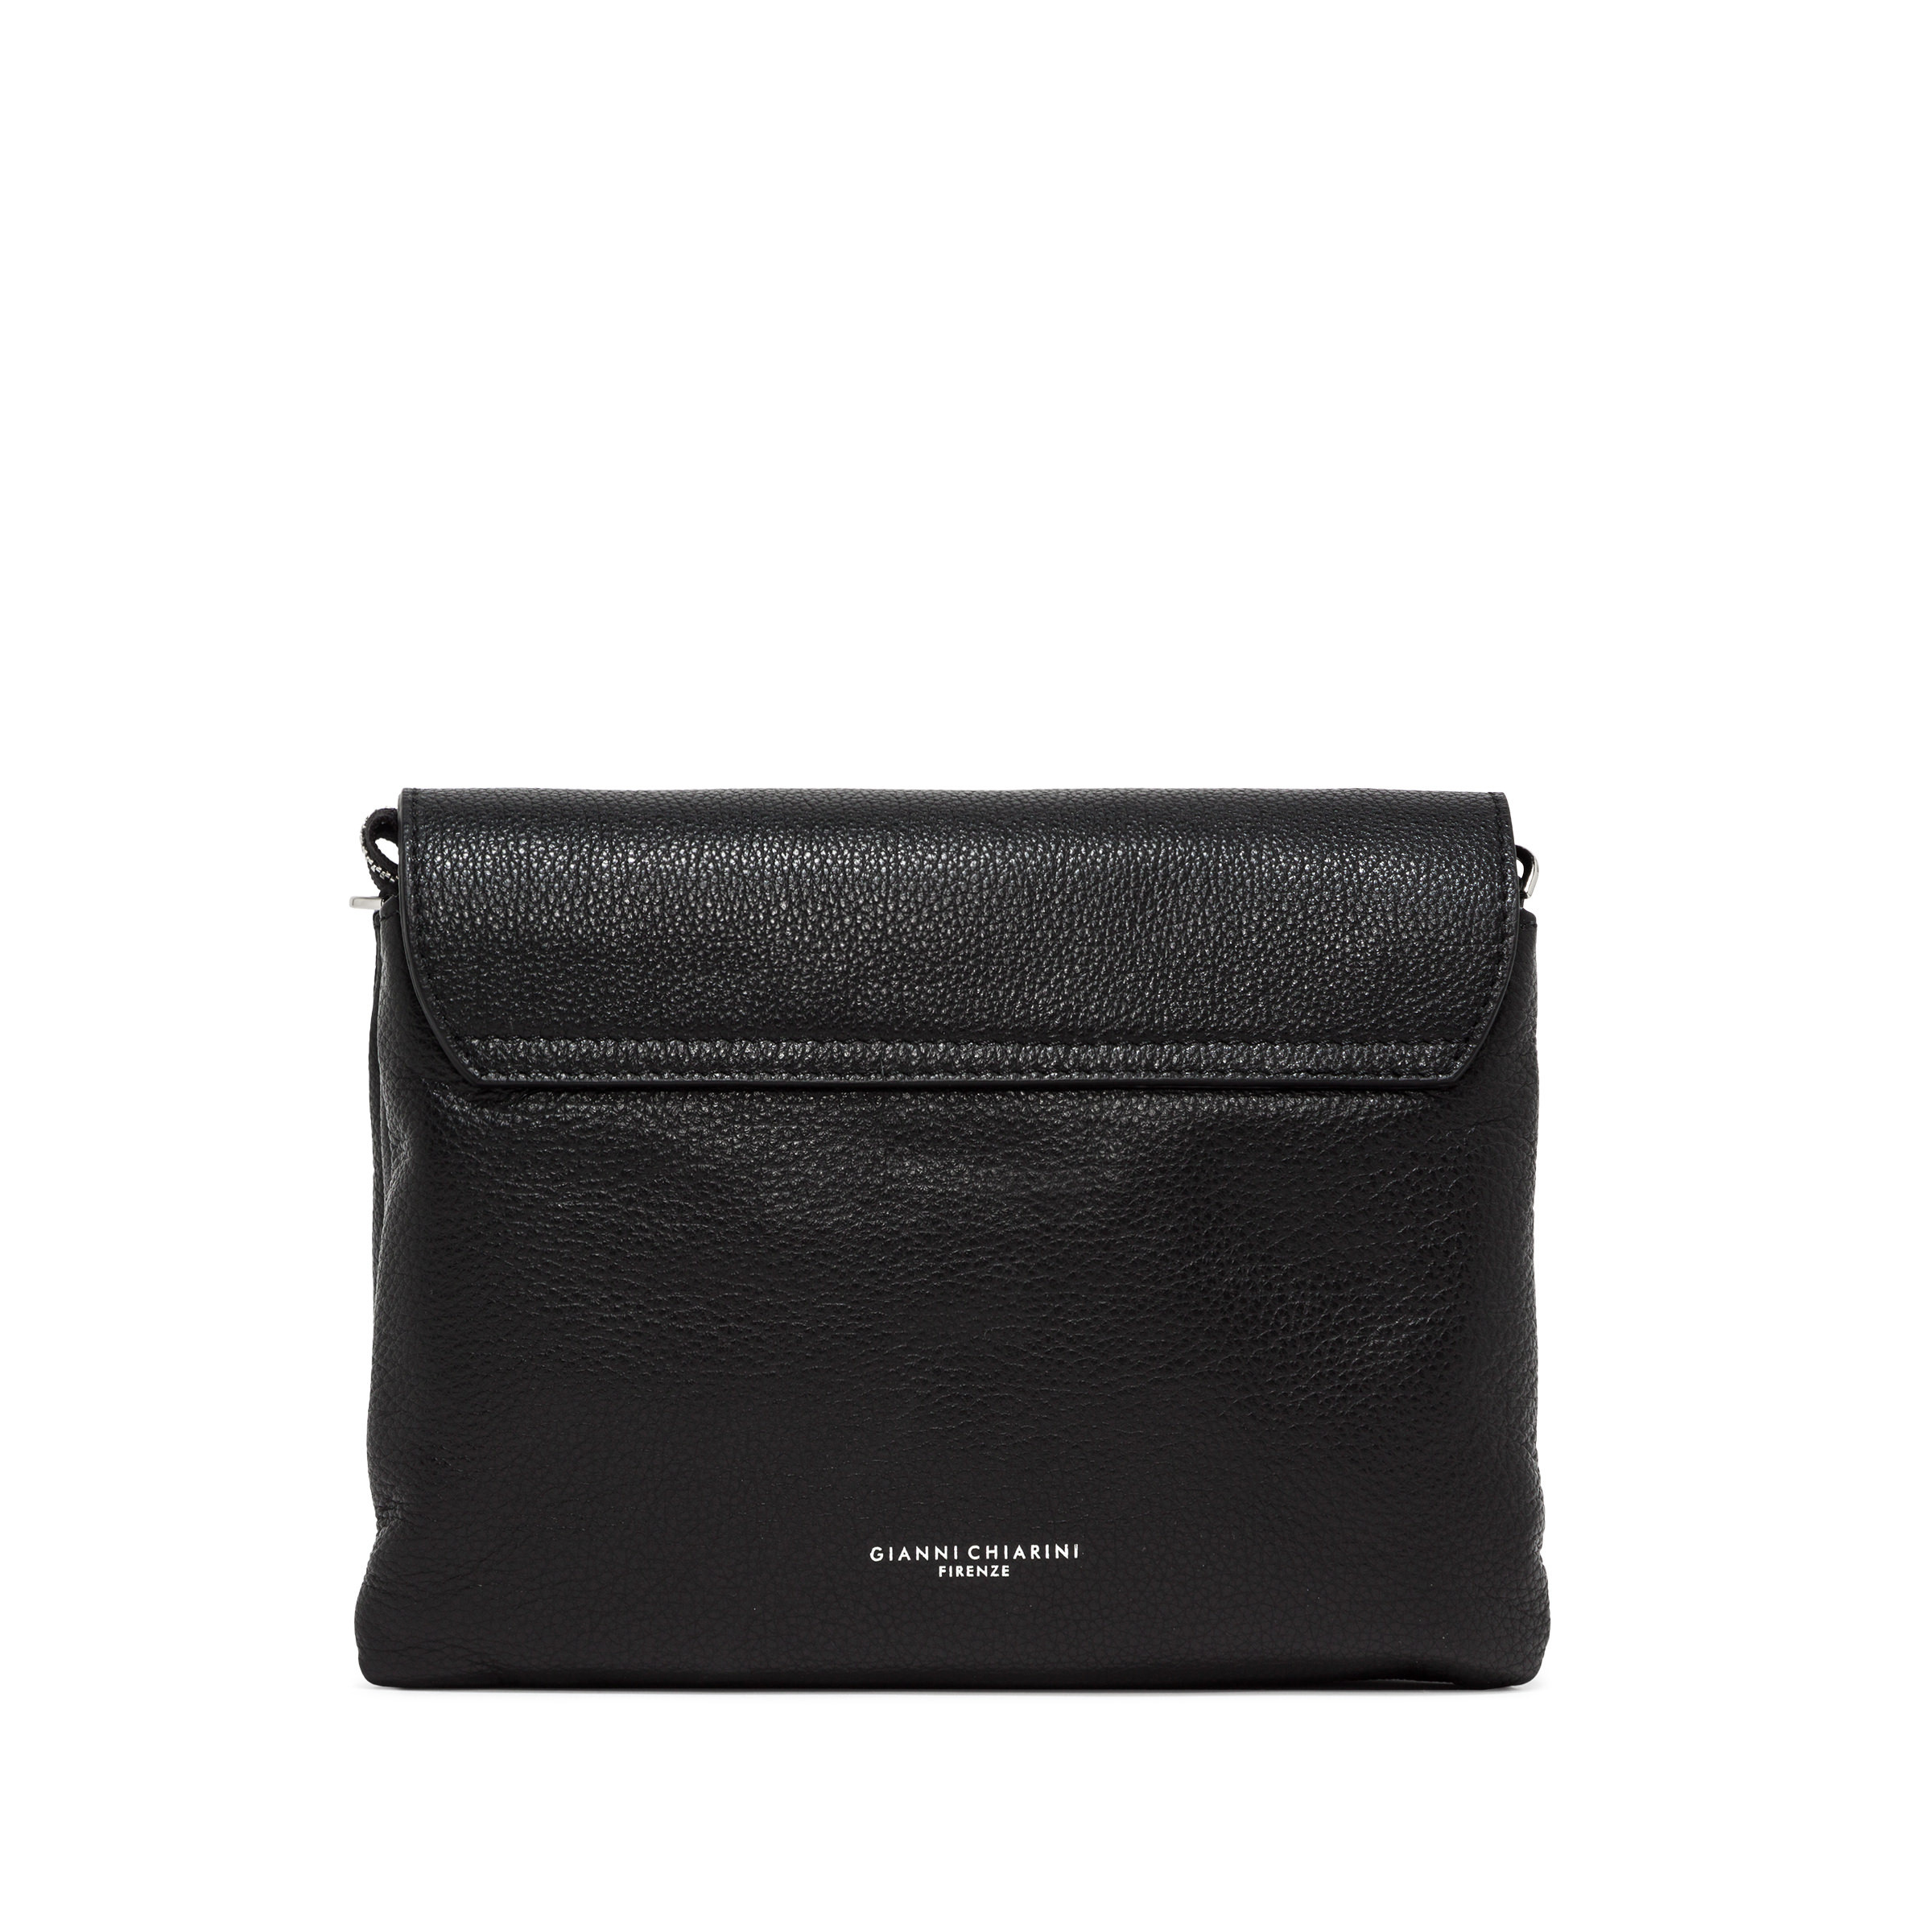 Gianni Chiarini - Three leather bag, Black, large image number 2